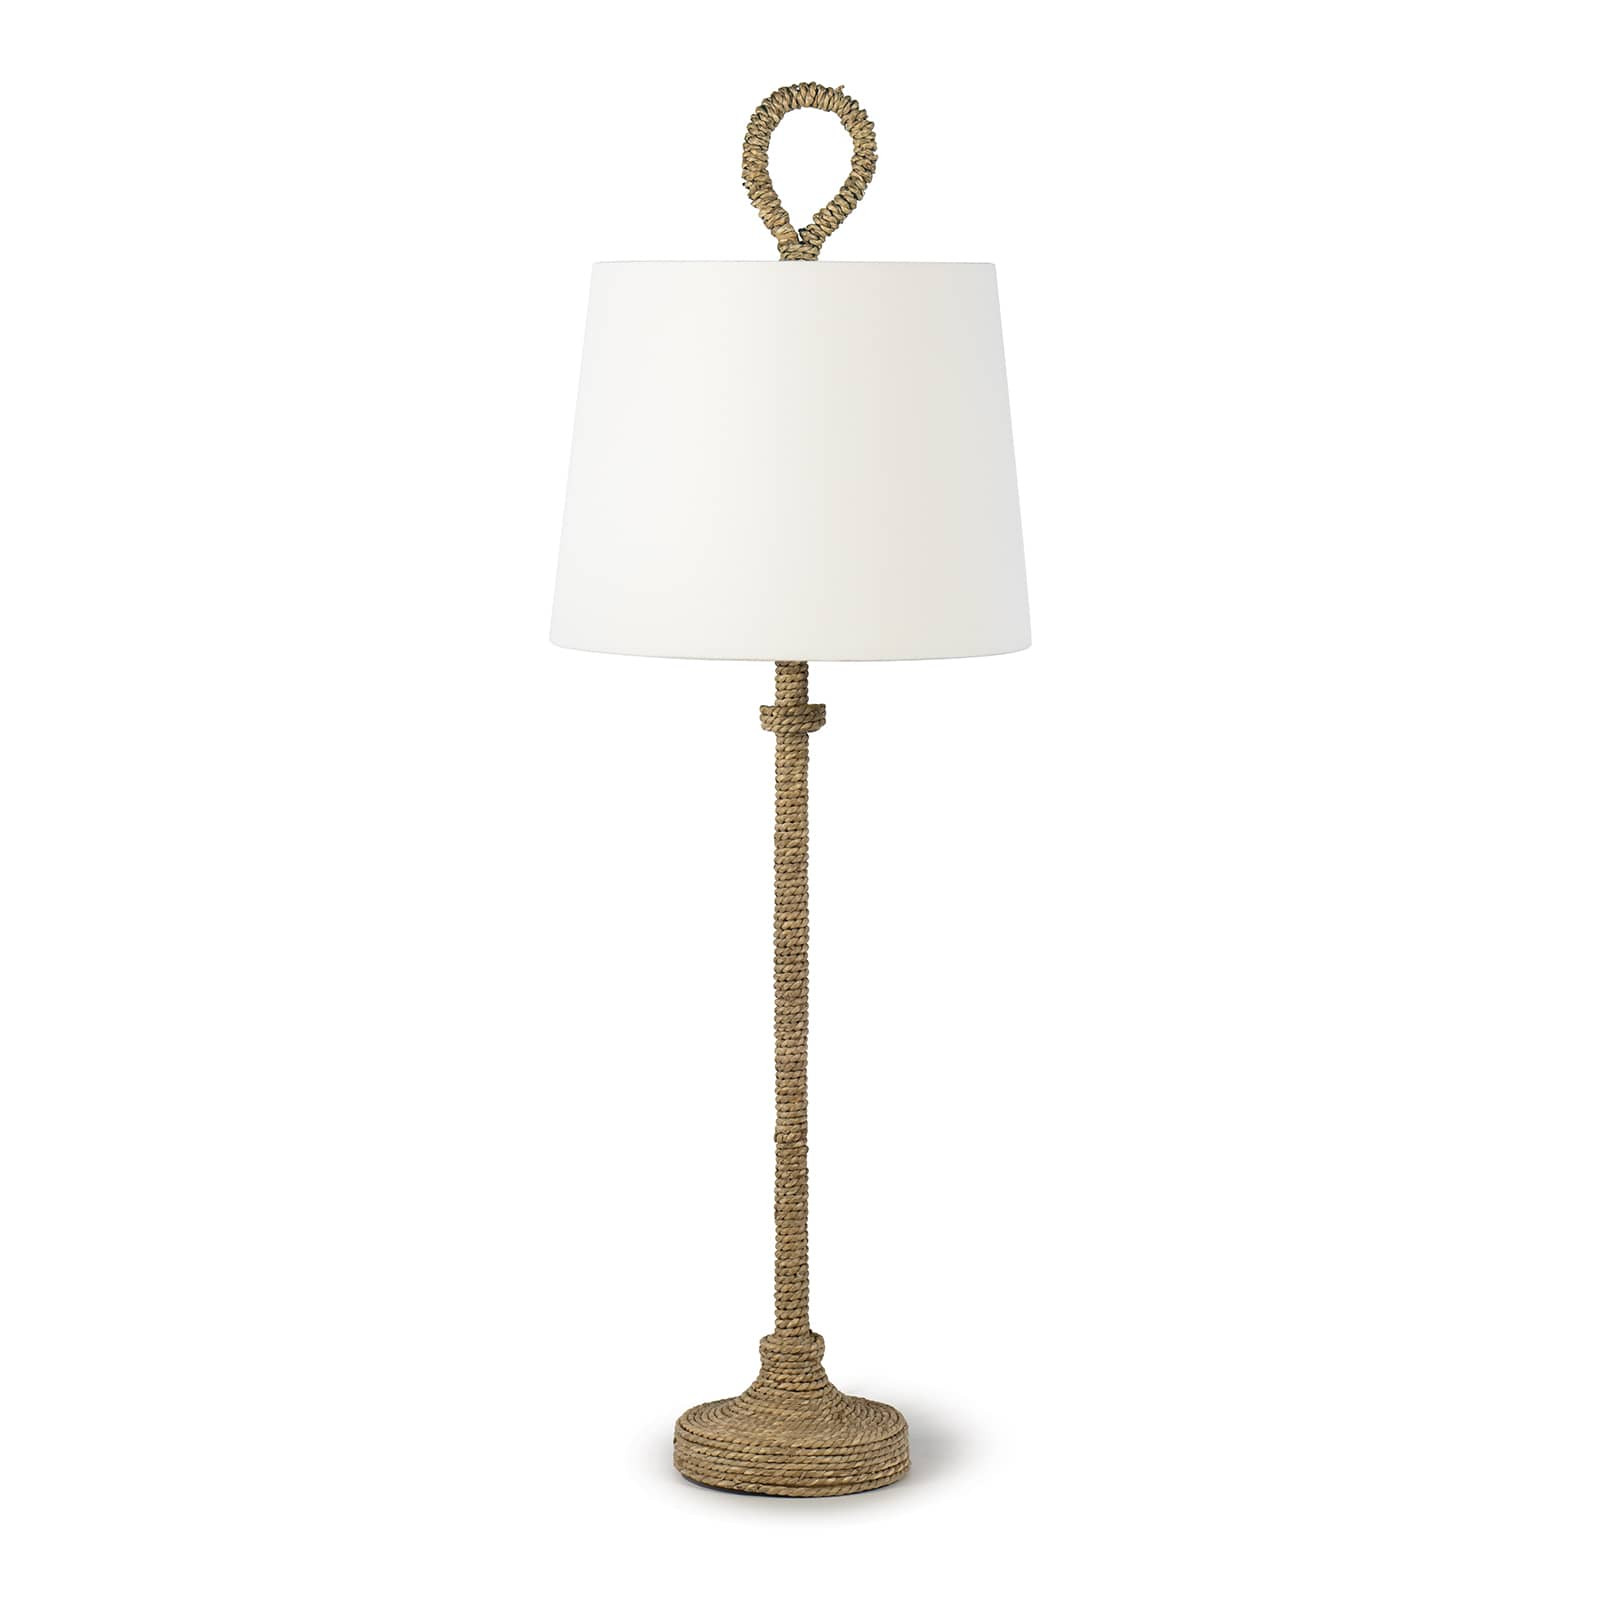 Jute Wrapped Lamp-$395.00